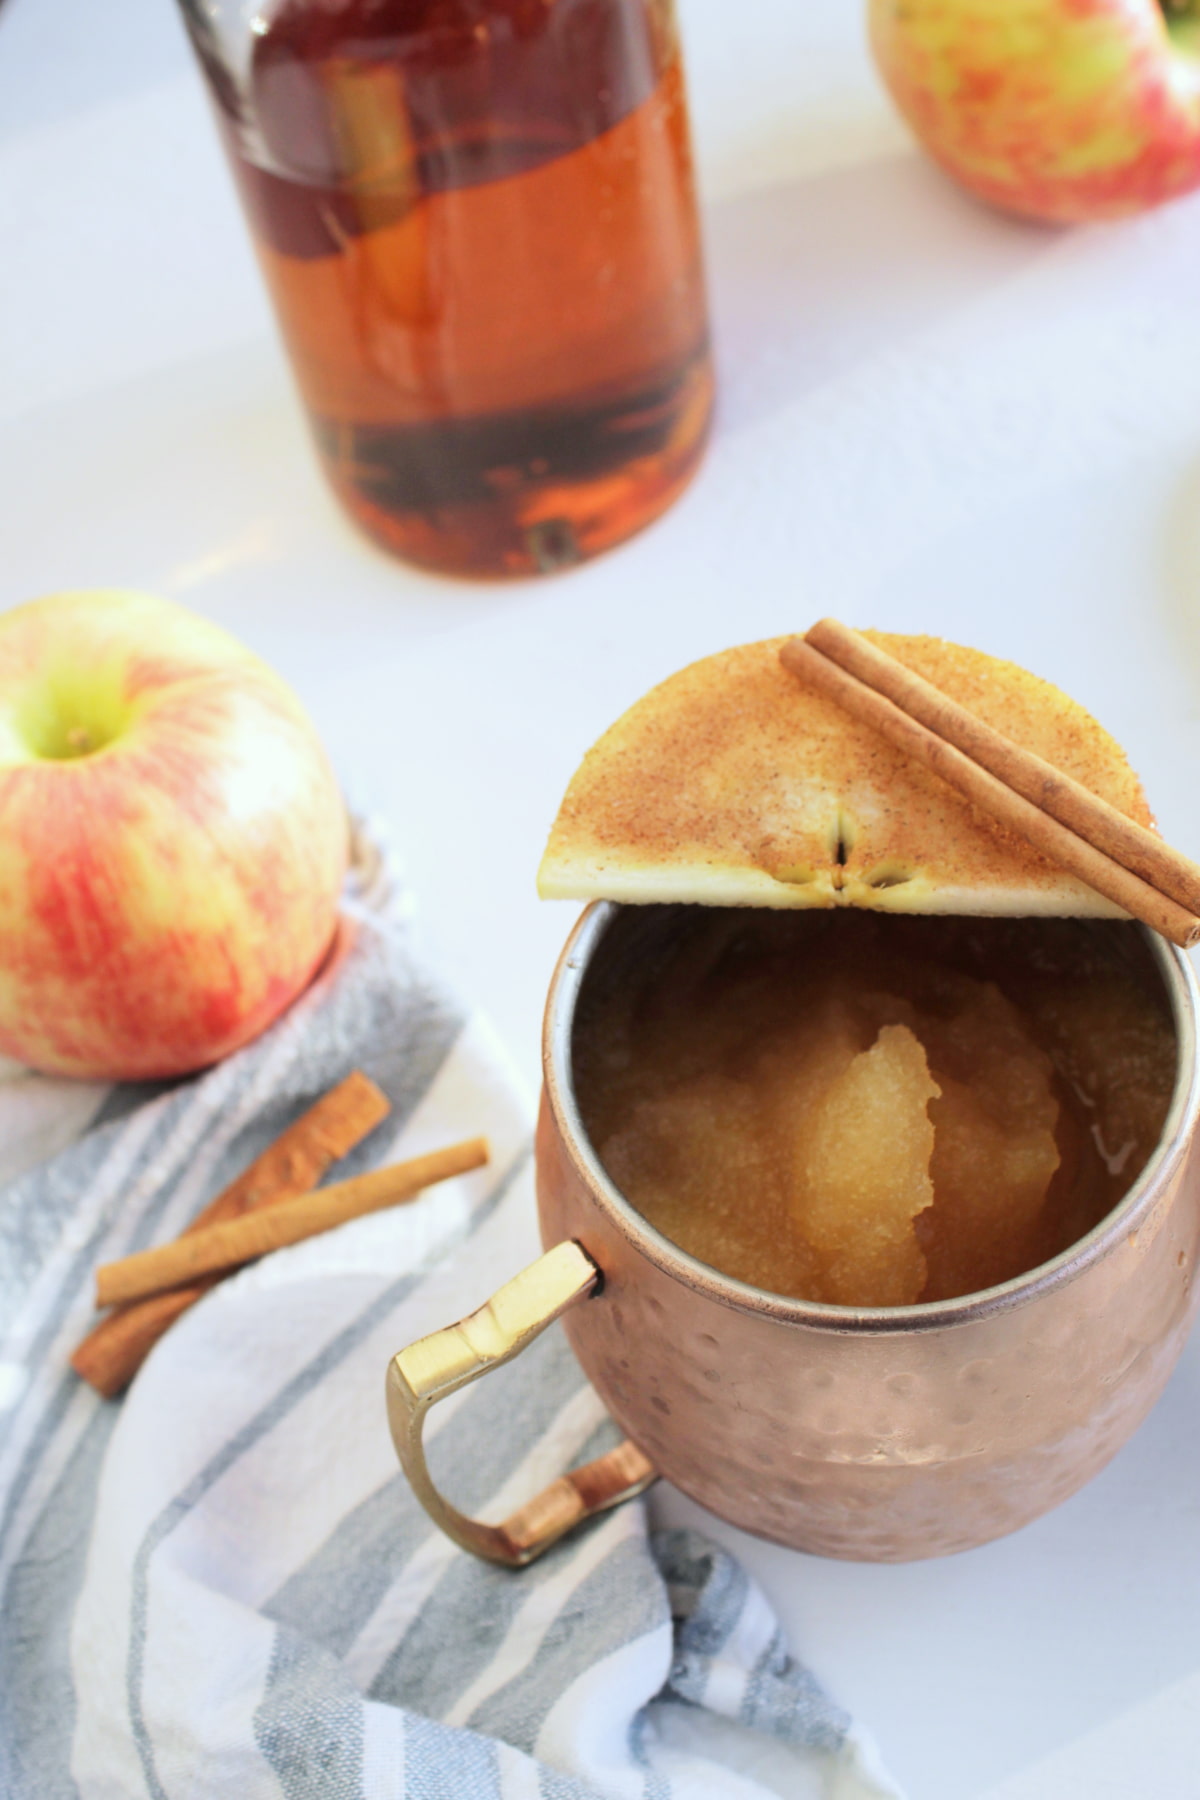 frozen alcoholic slushie in a copper mug garnished with apple slice.